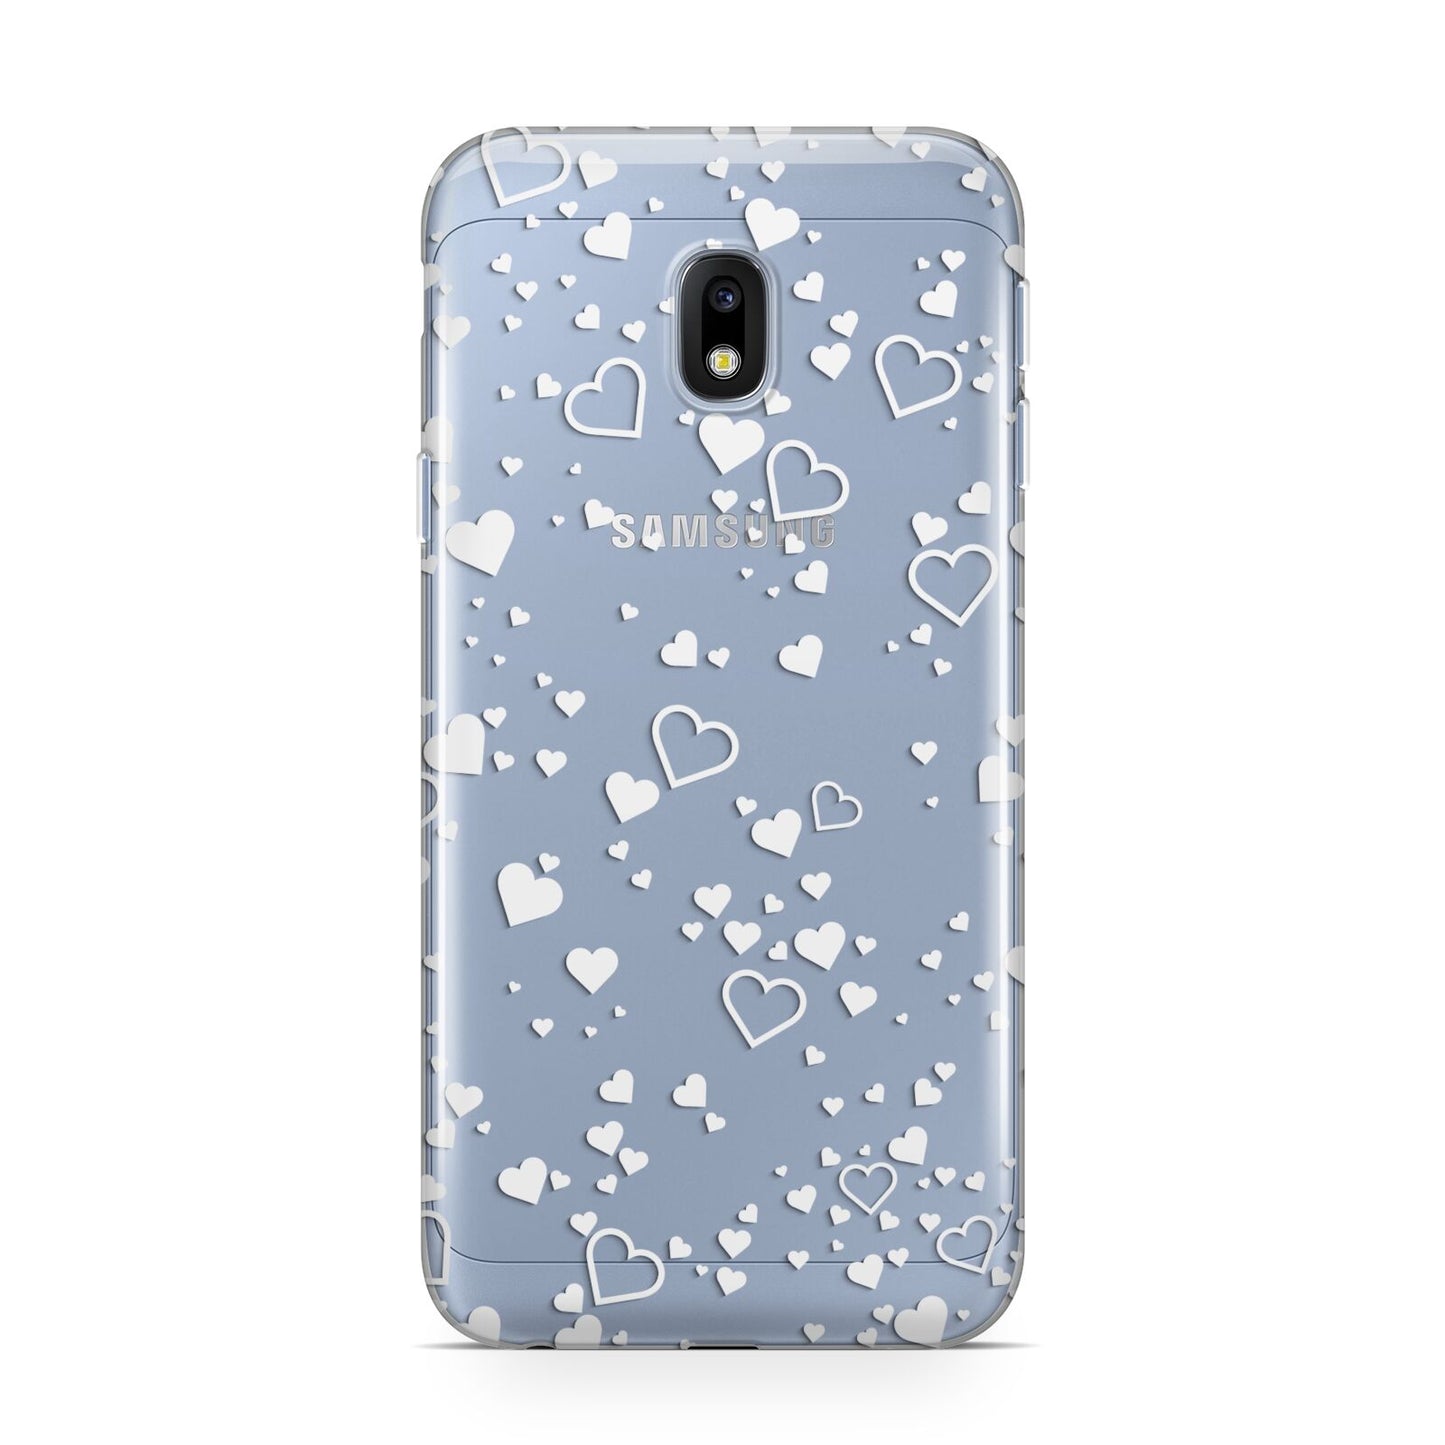 White Heart Samsung Galaxy J3 2017 Case